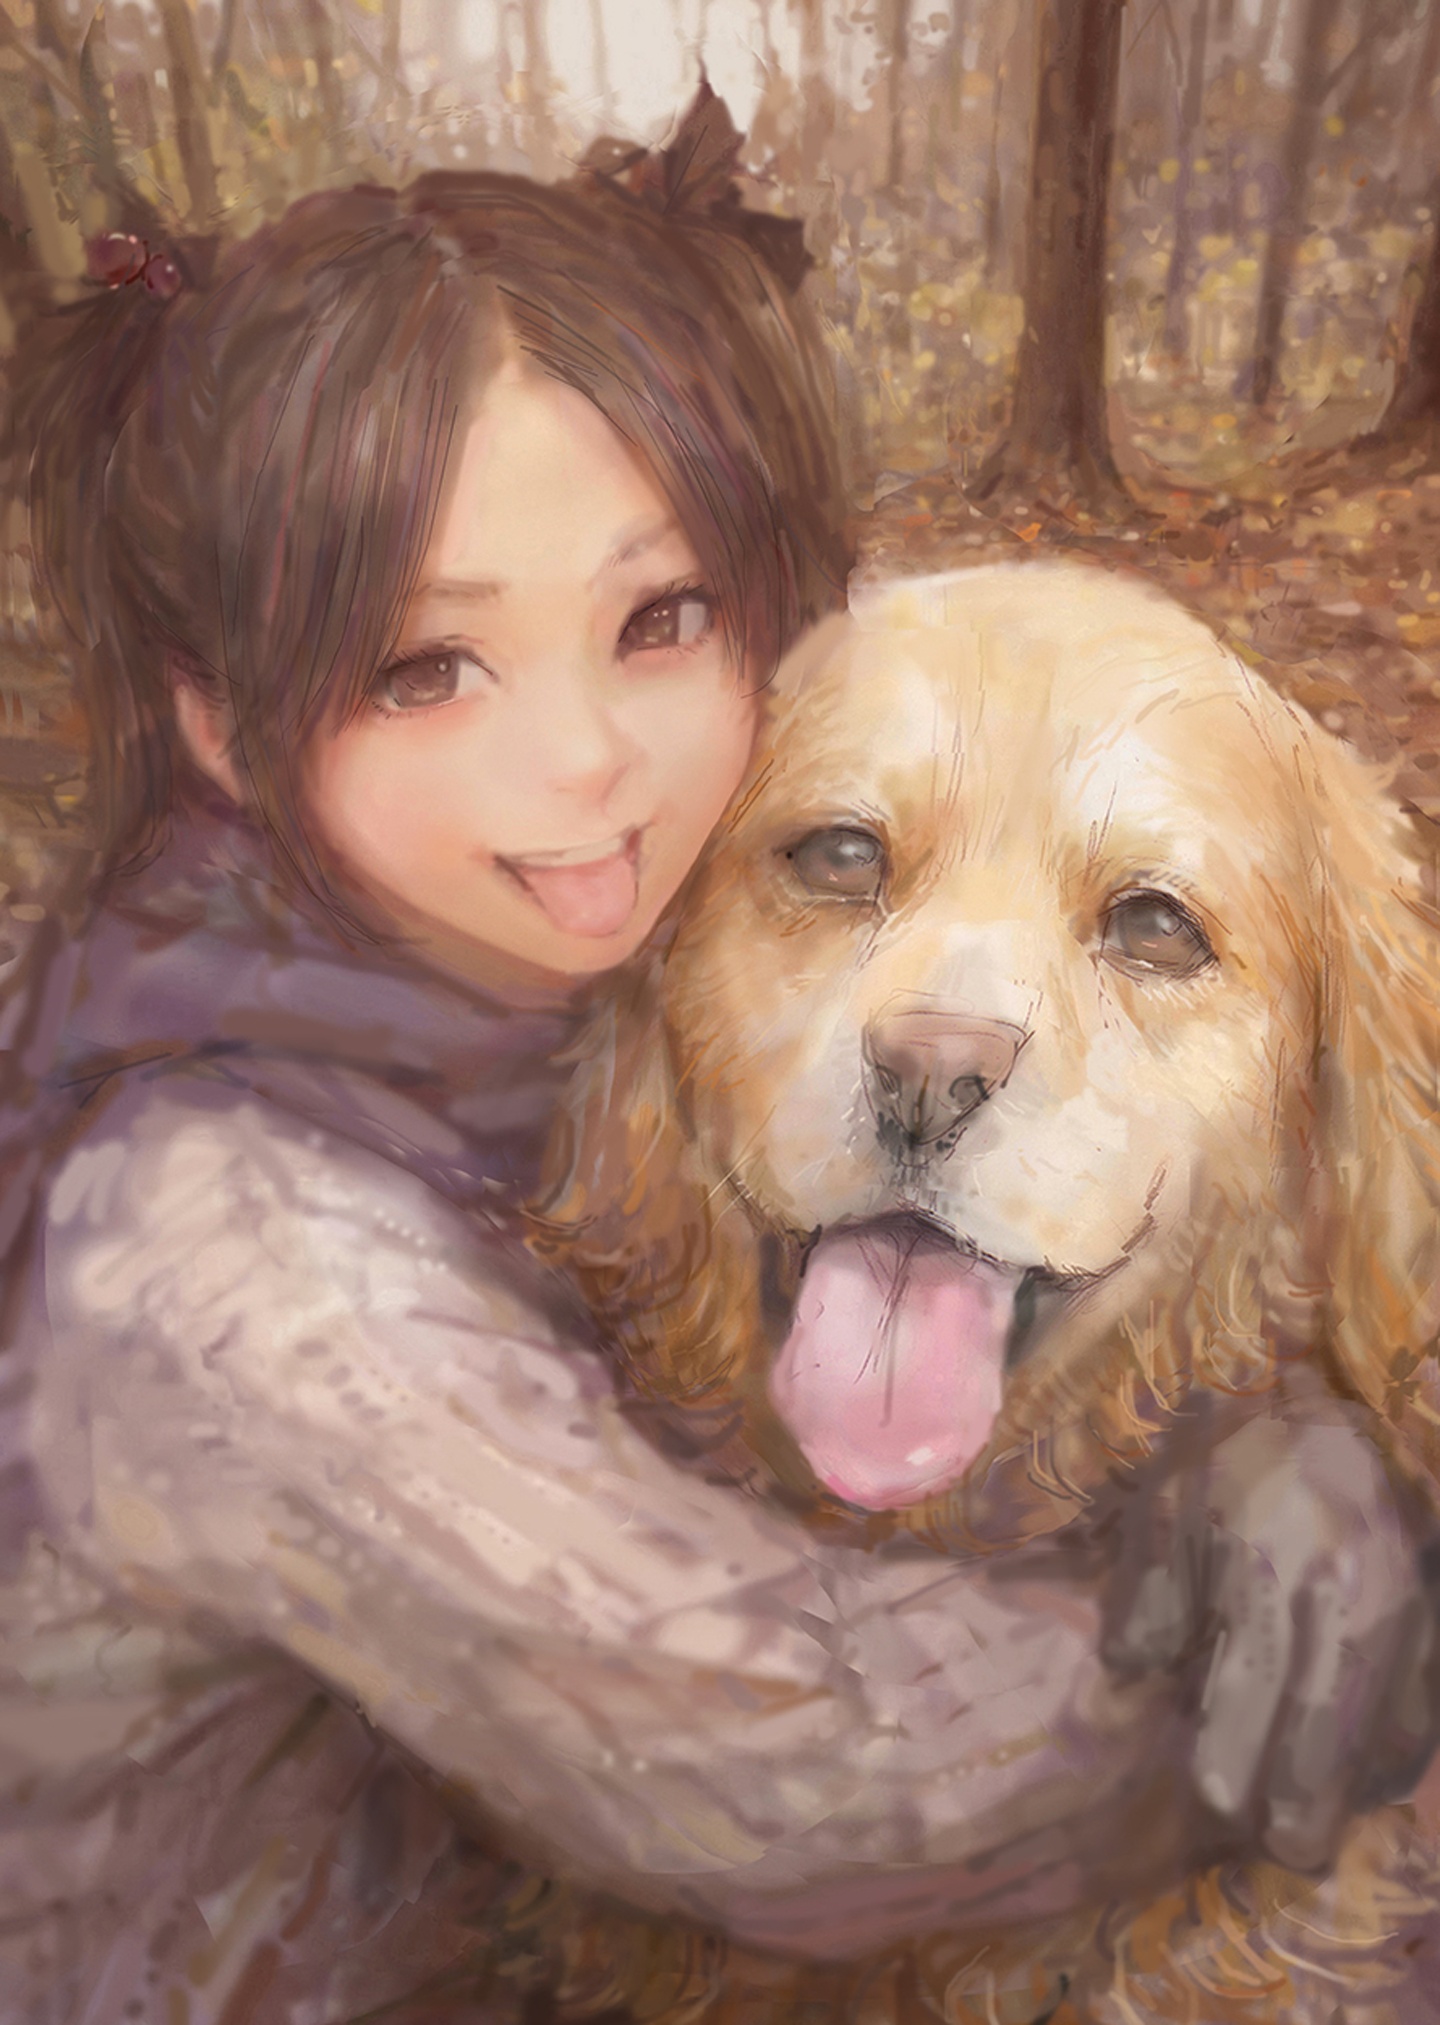 Wallpaper ID 97929  artwork anime landscape painting fan art anime  girls dog illustration free download